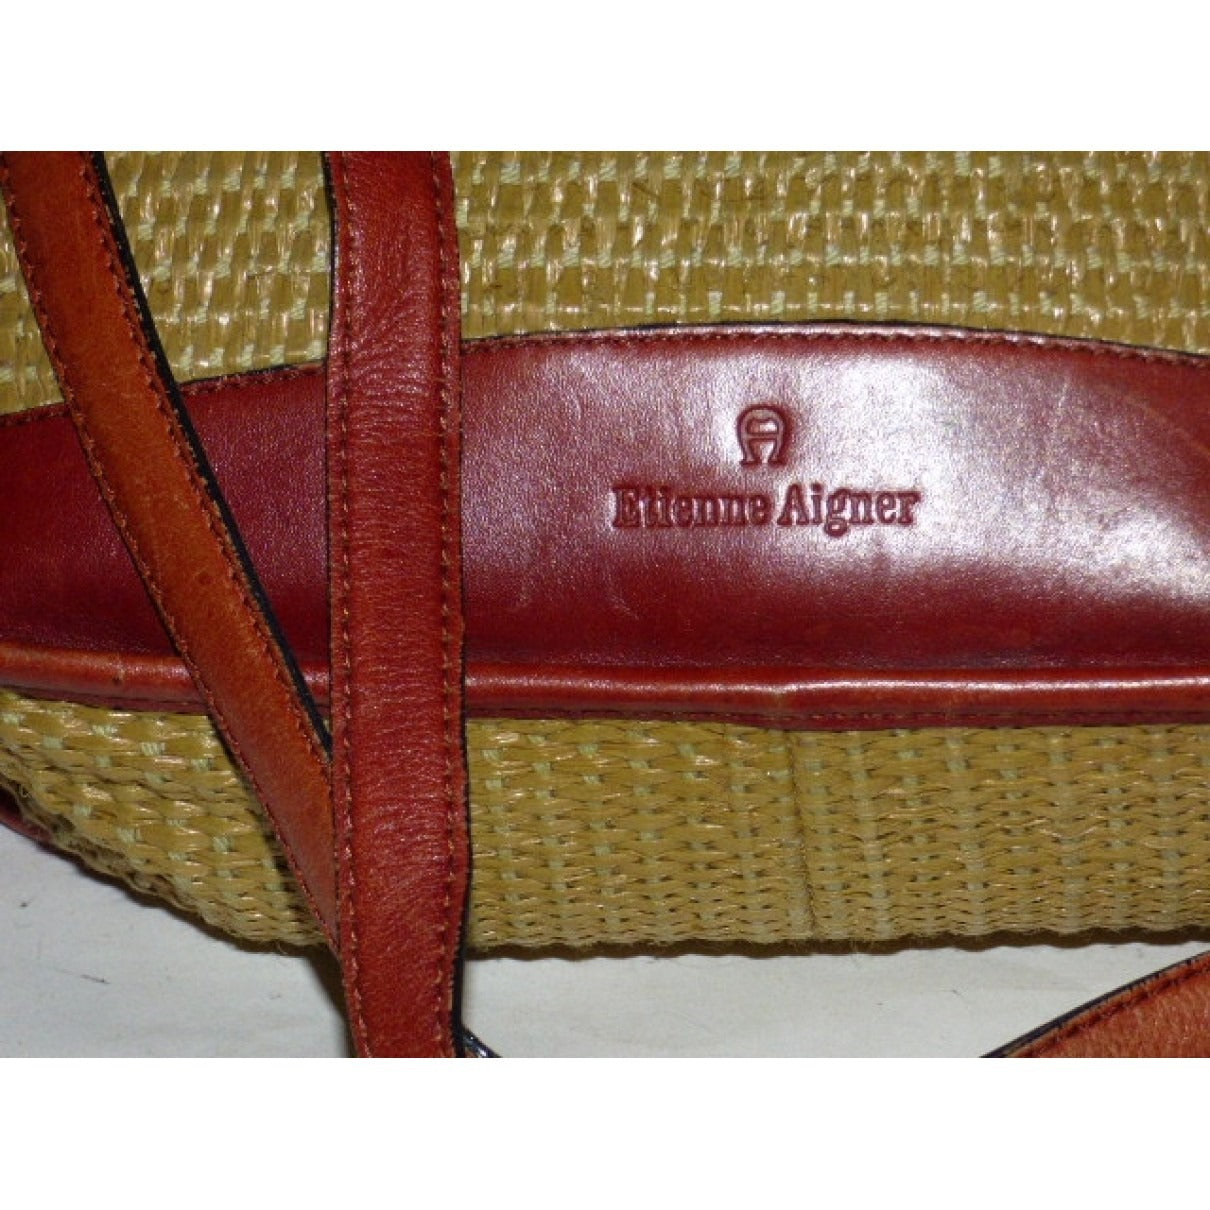 Etienne Aigner woven raffia & brown leather shoulder handbag